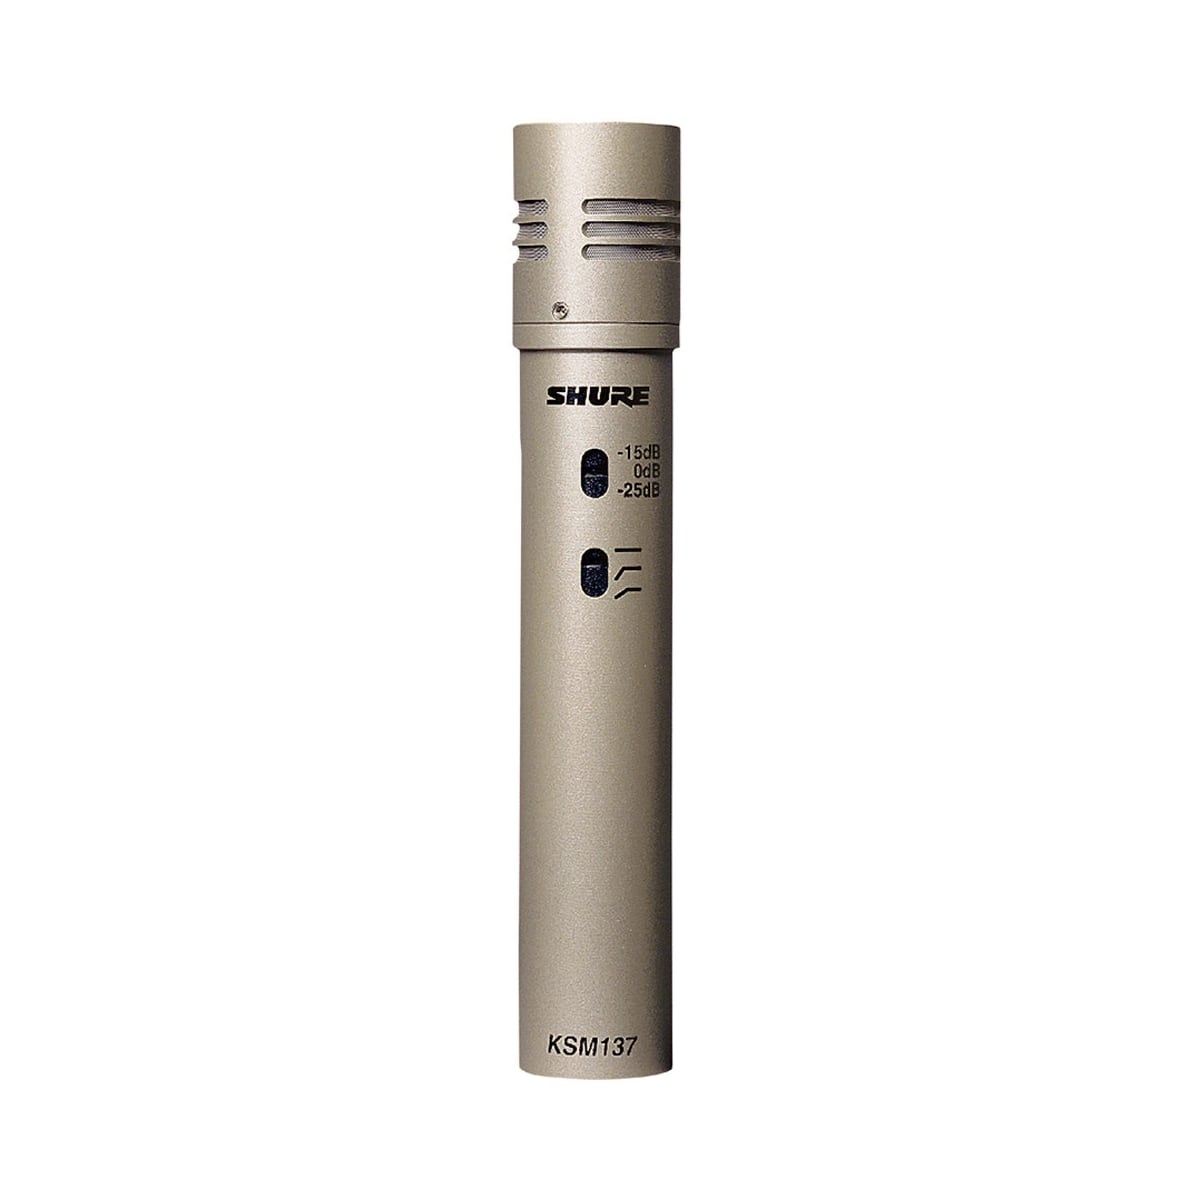 Shure KSM137 Cardioid Condenser Microphone (Silver)